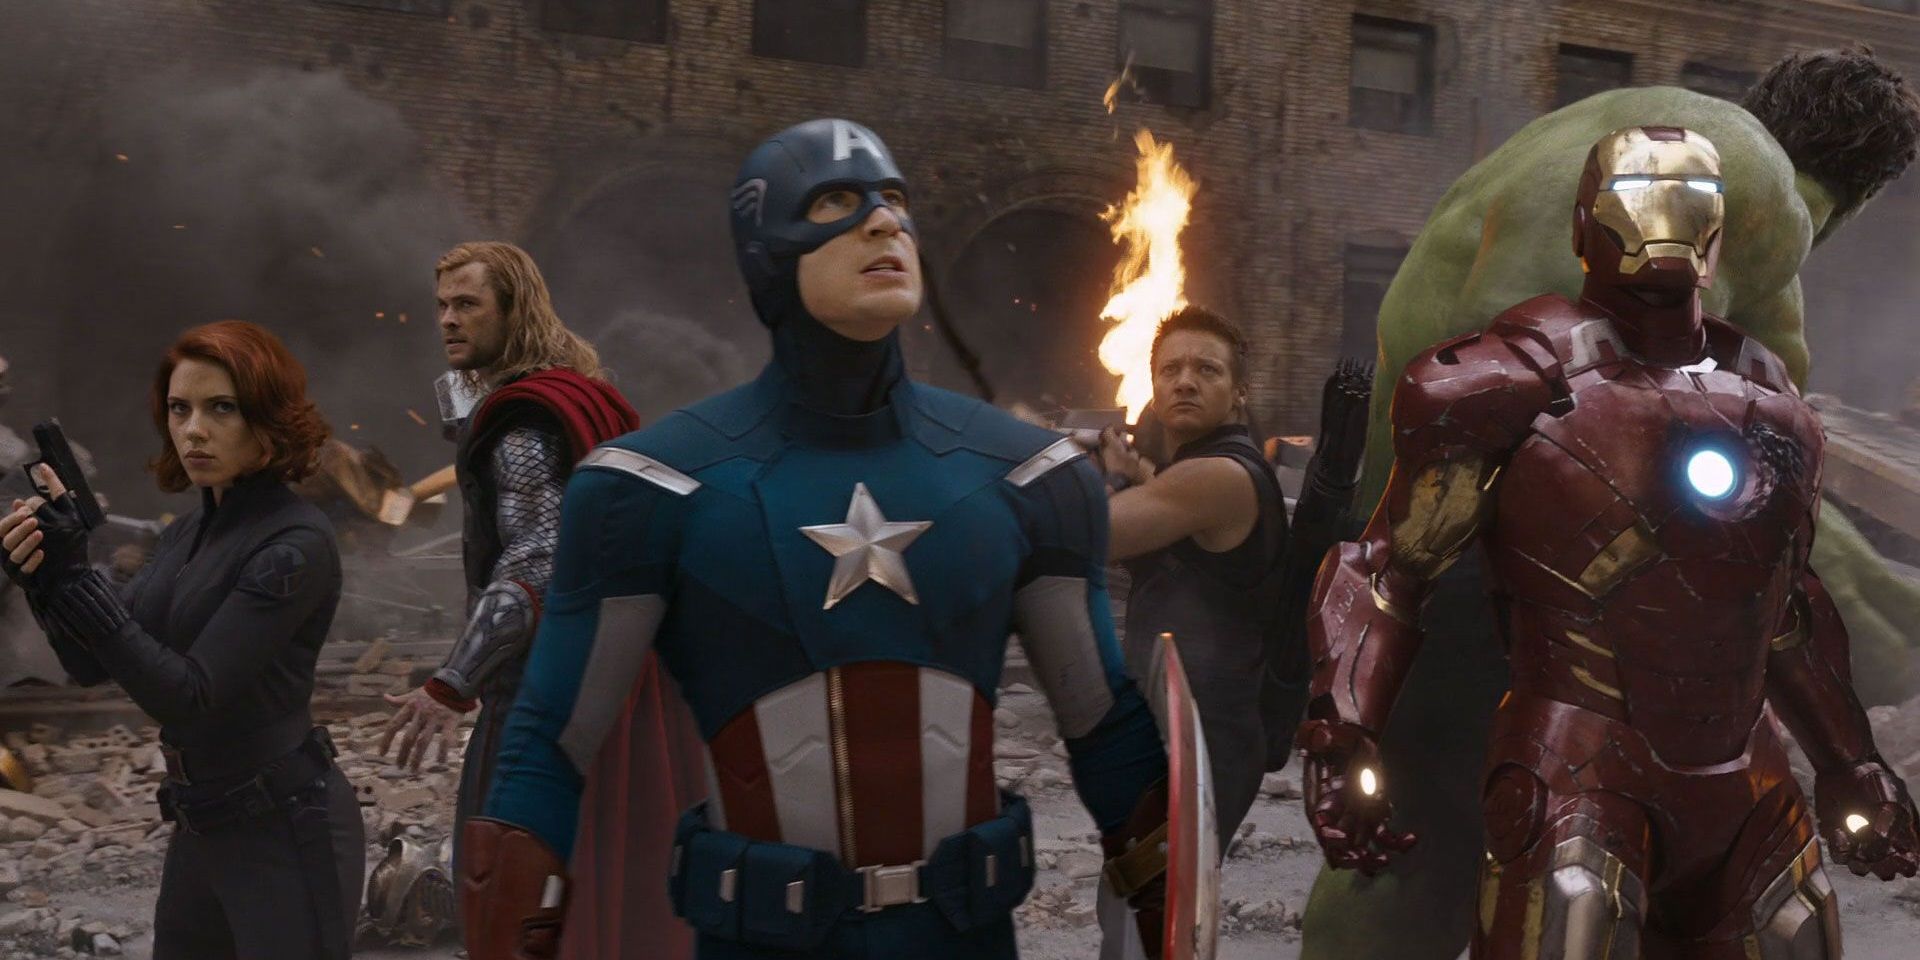 The Avengers prepare for the Battle of New York